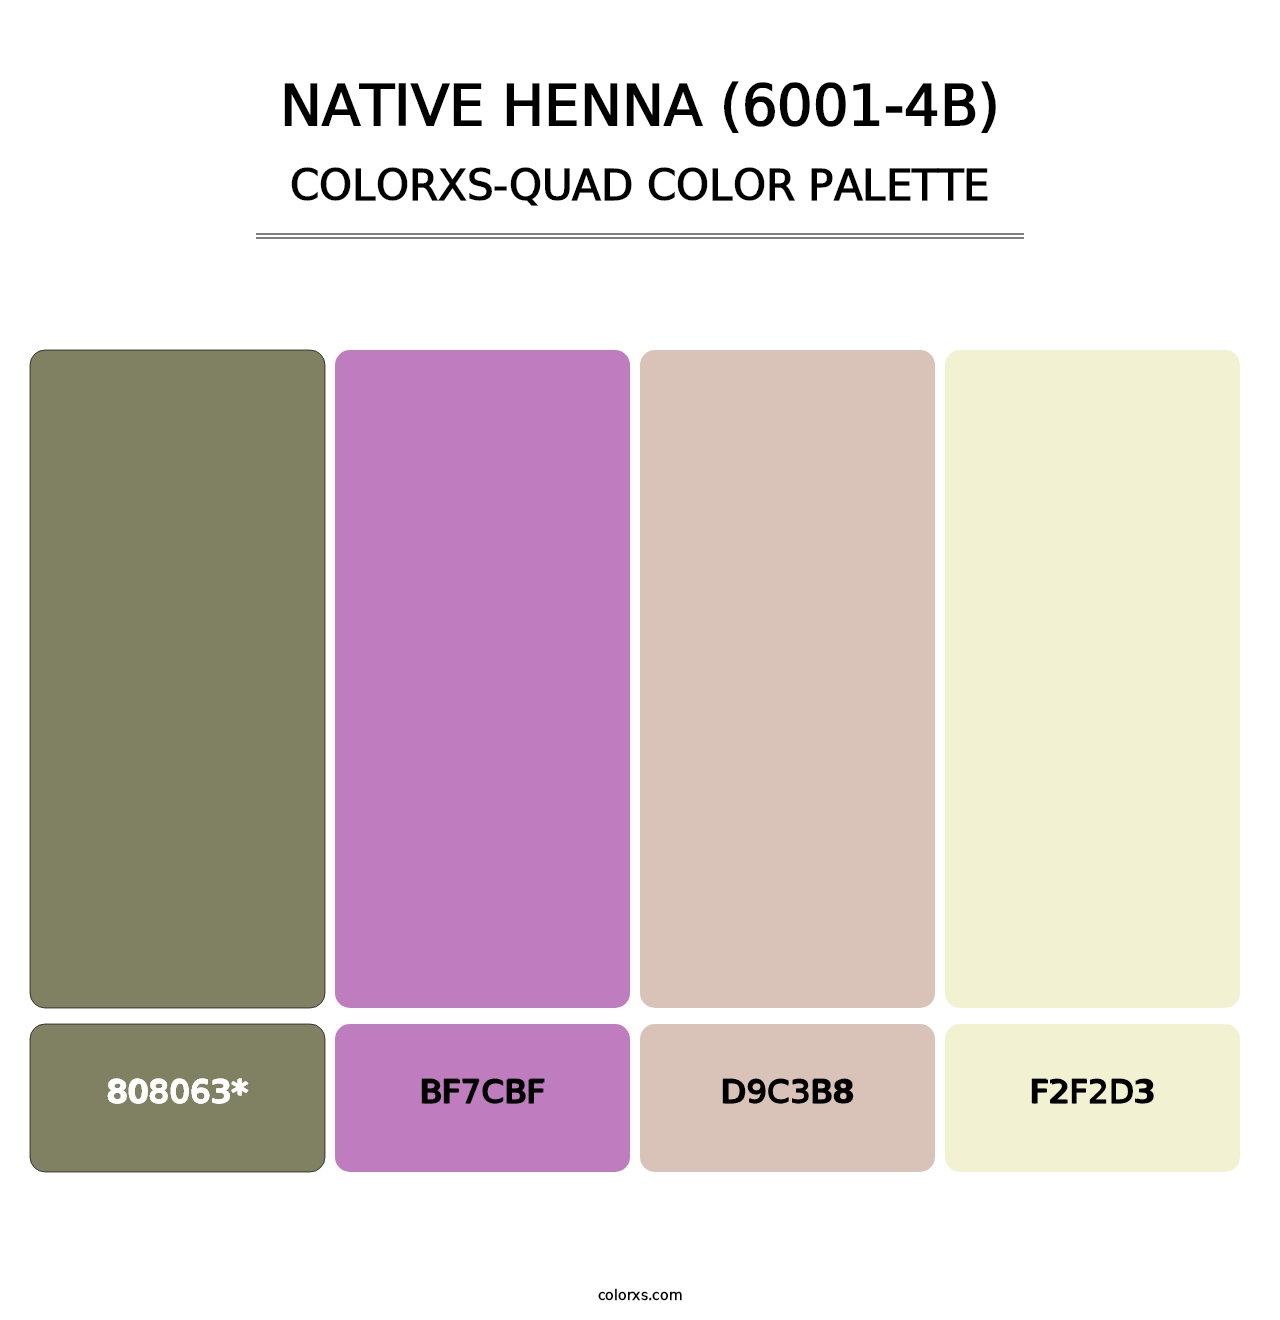 Native Henna (6001-4B) - Colorxs Quad Palette